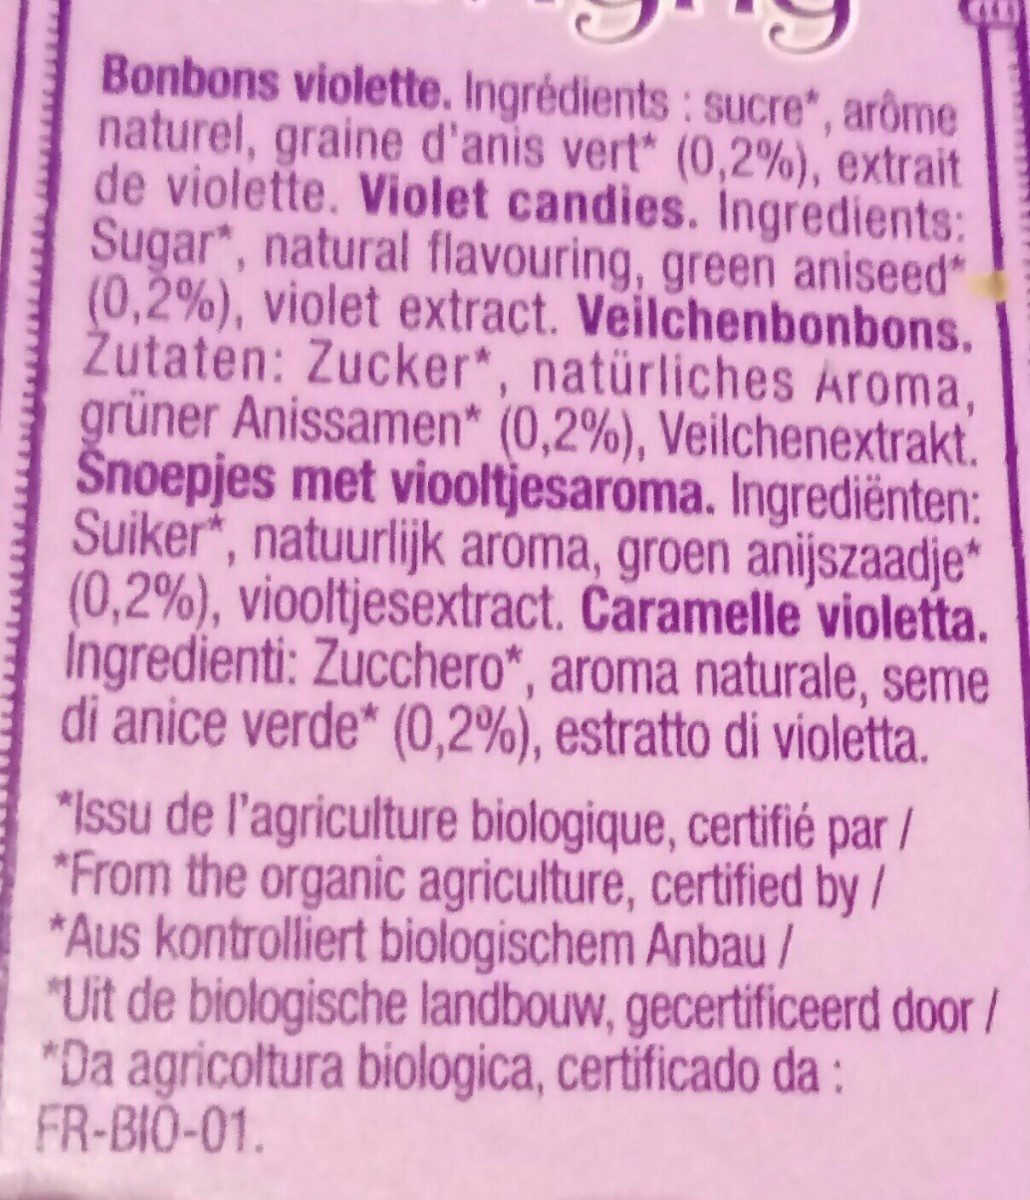 Etui 18g violette bio - Ingredients - fr